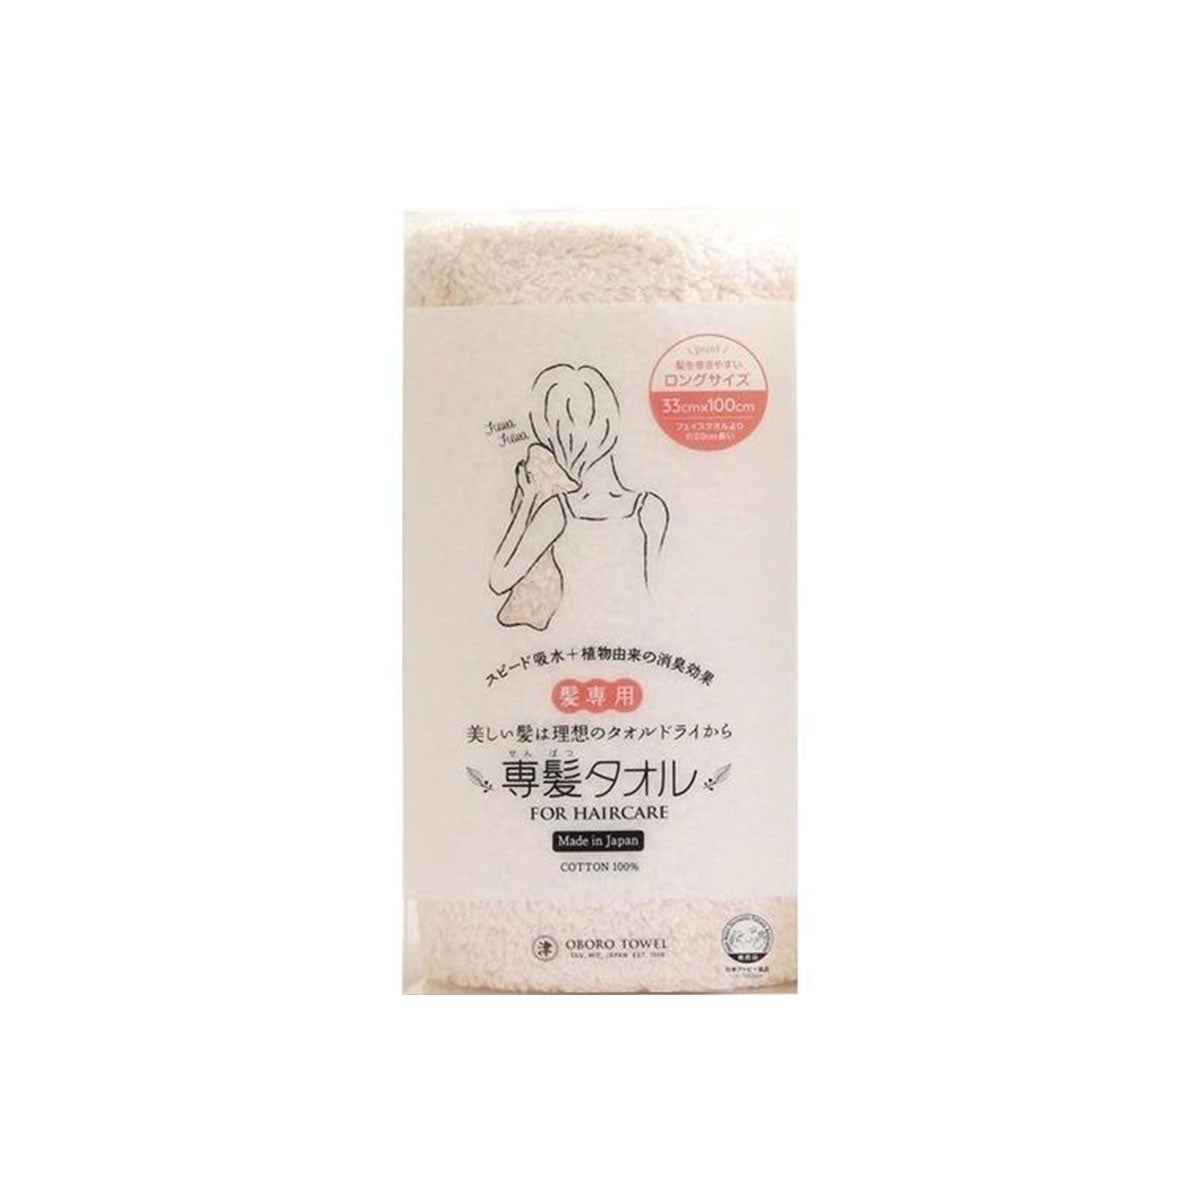 Senpatsu Hair Drying Towel 1pc